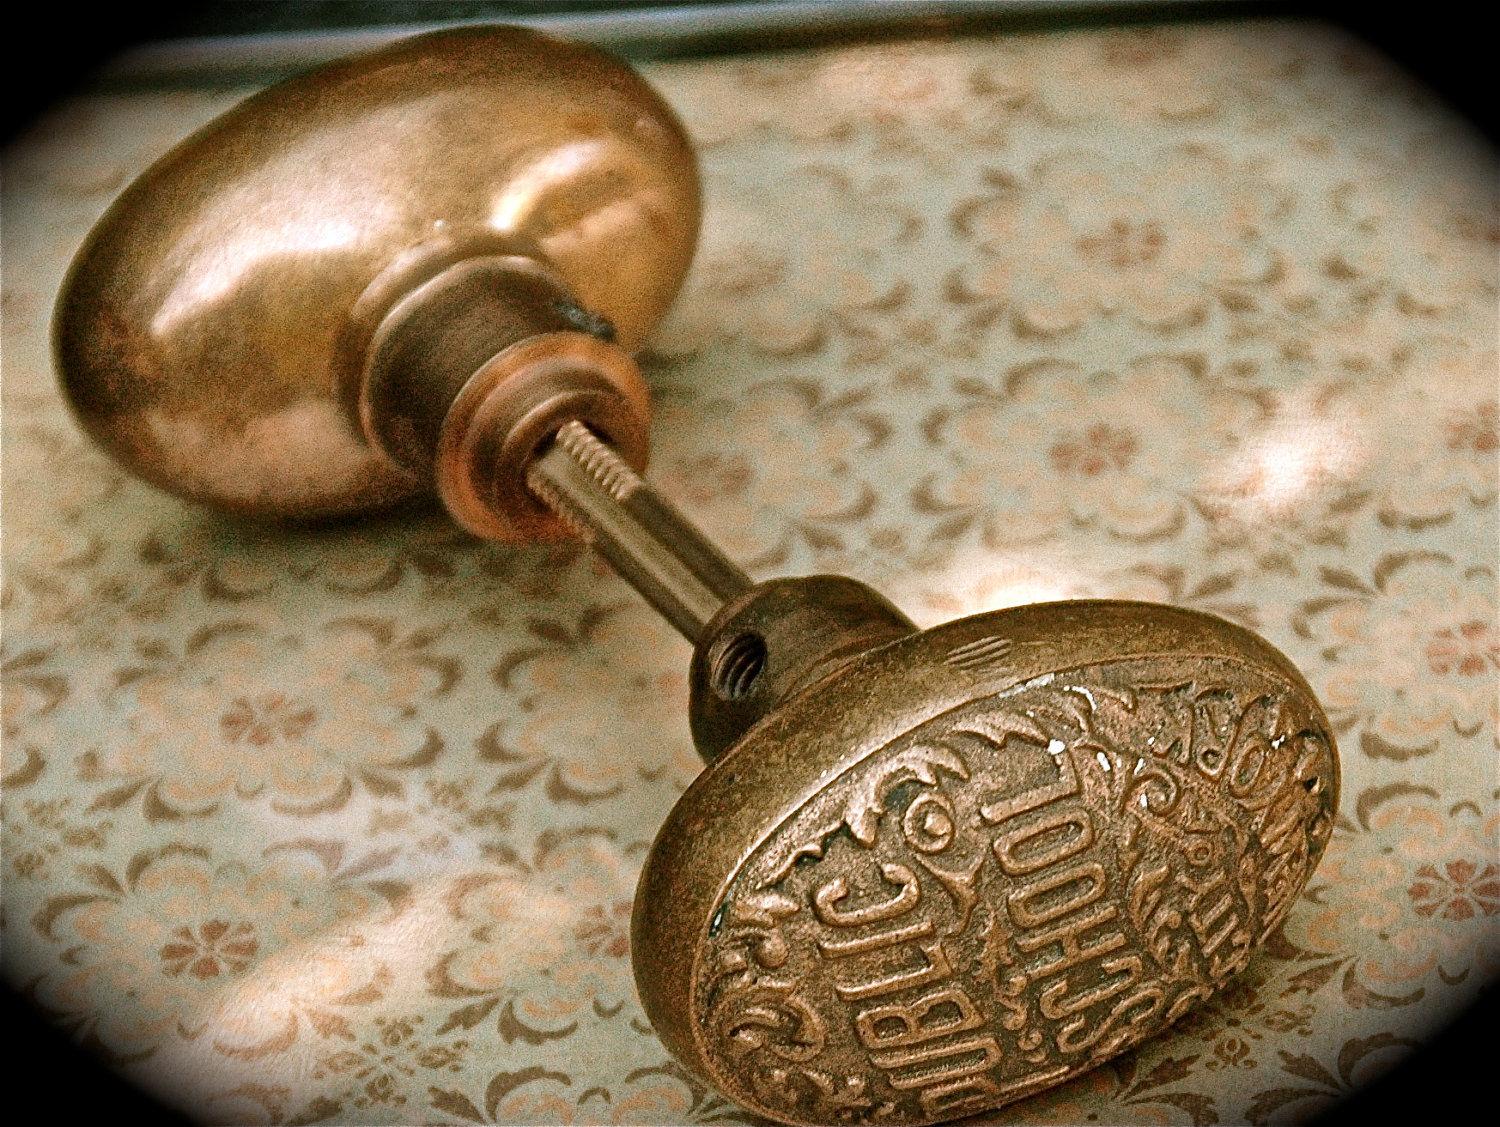 used door knobs photo - 18